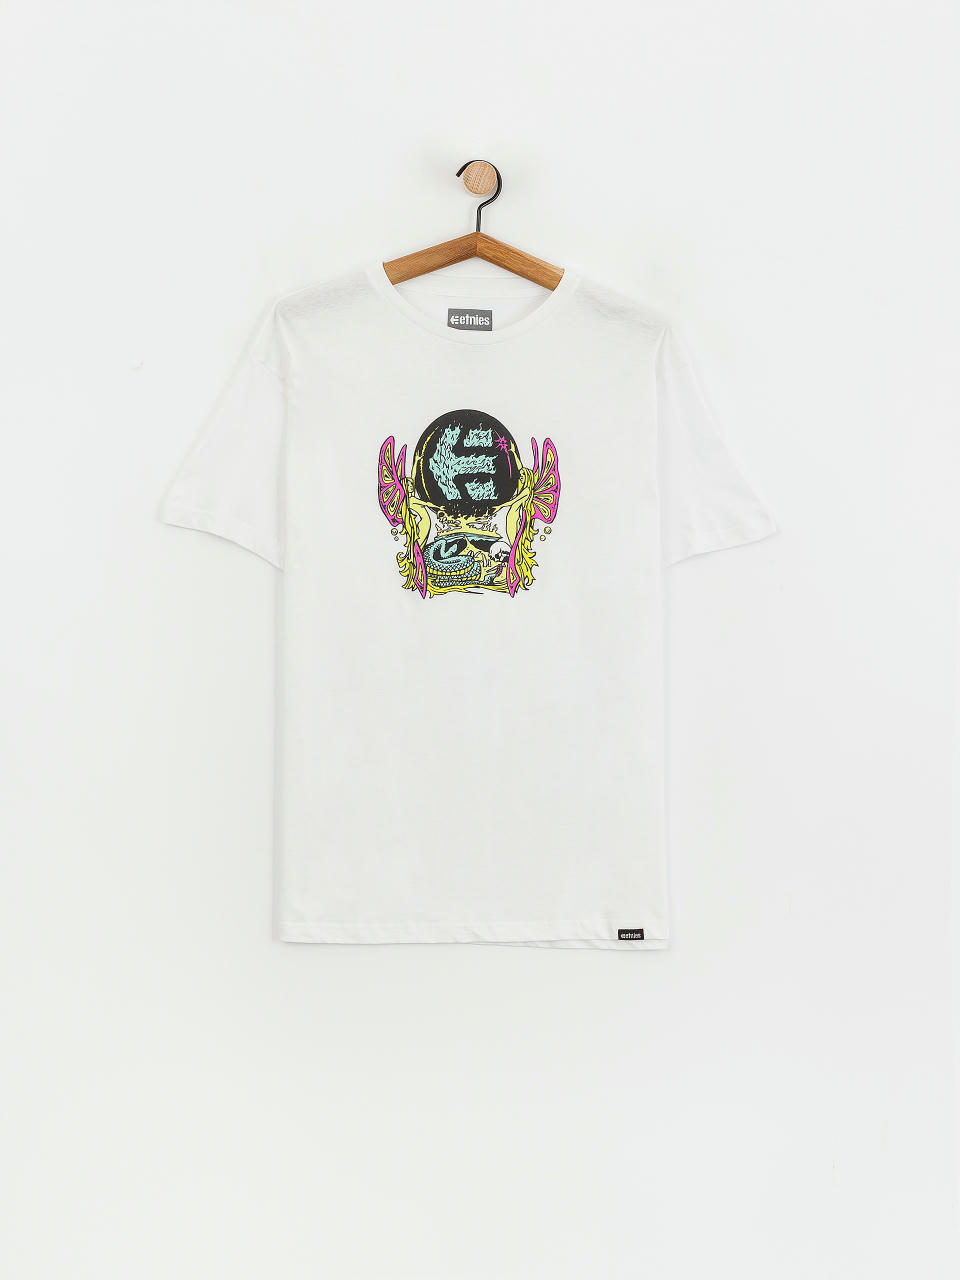 Etnies Crystal Ball T-Shirt (white)